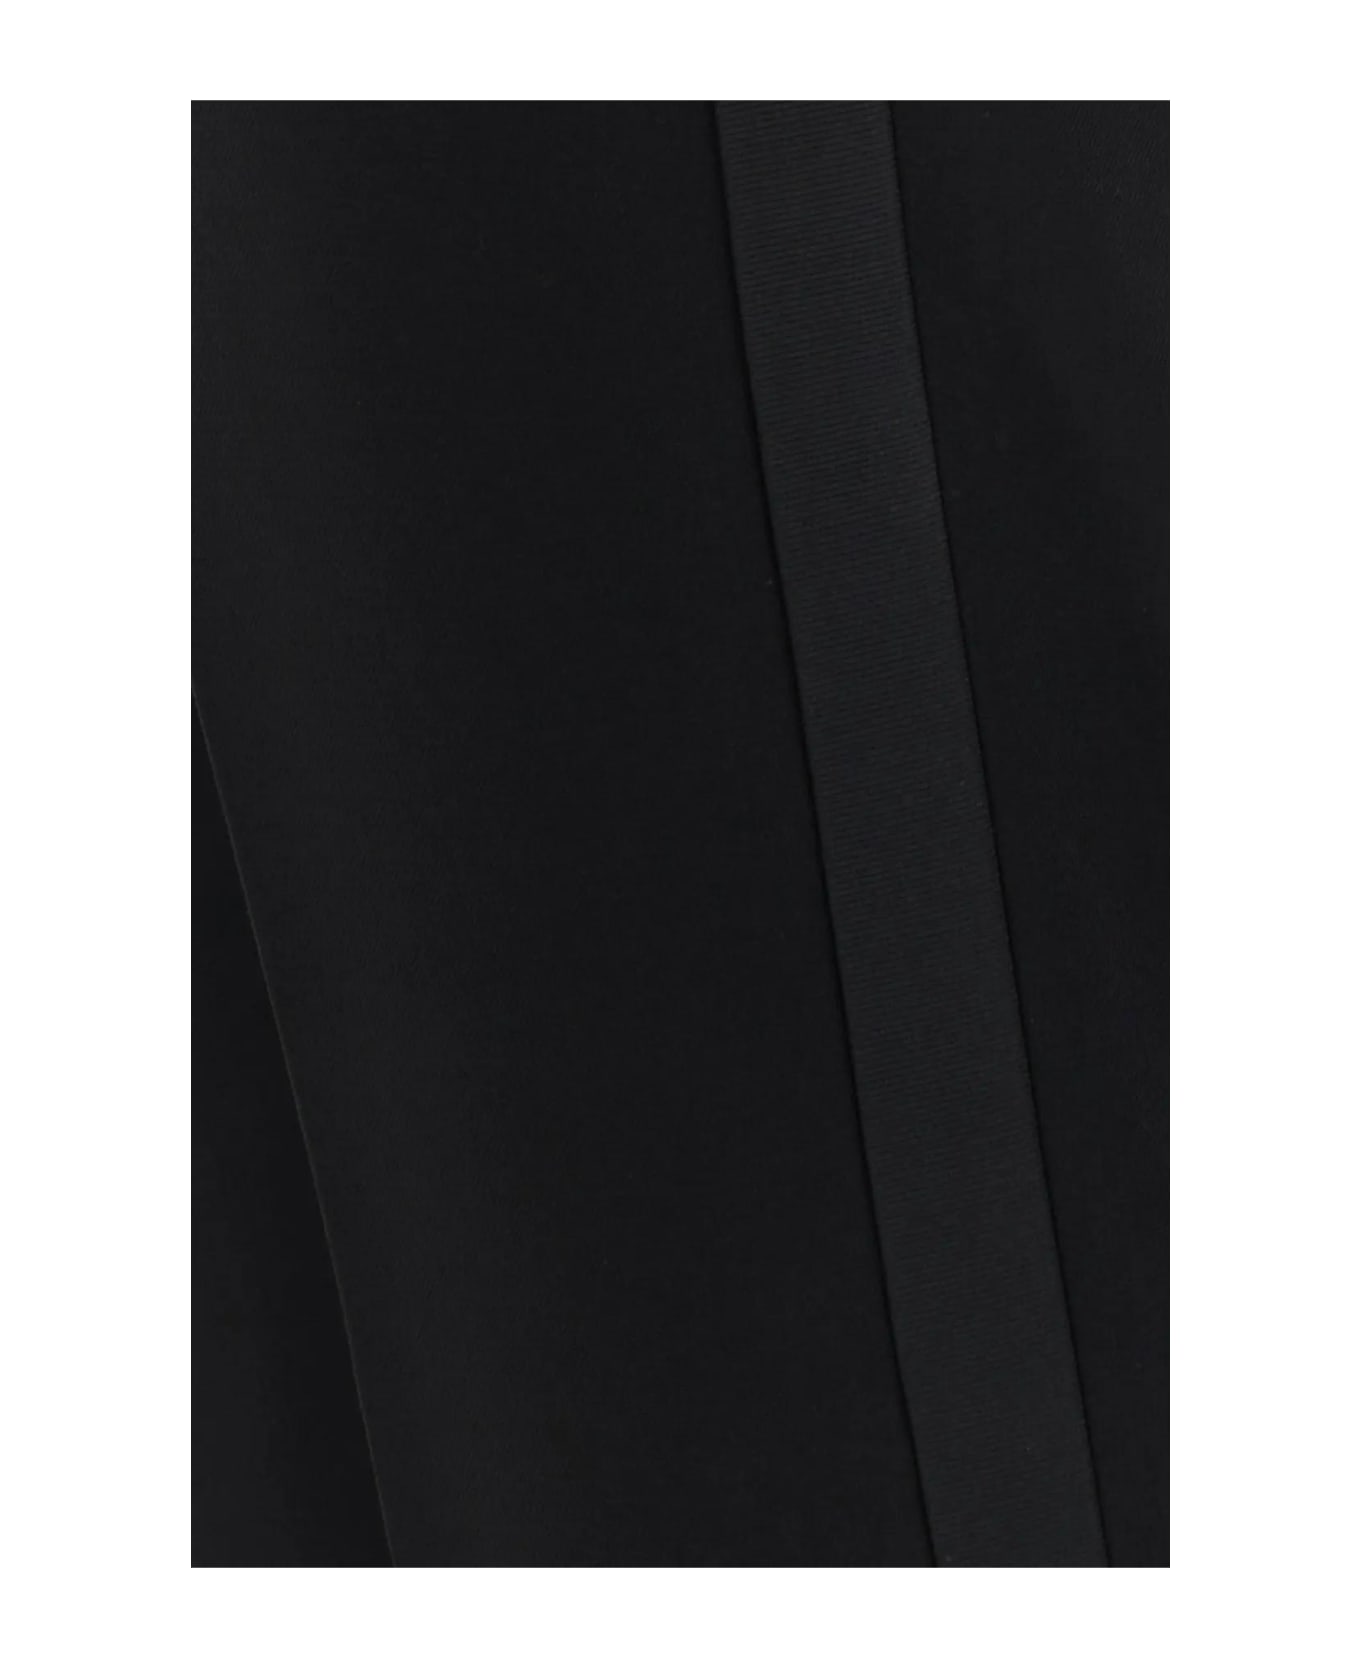 Giorgio Armani Black Fabric Suit スーツ